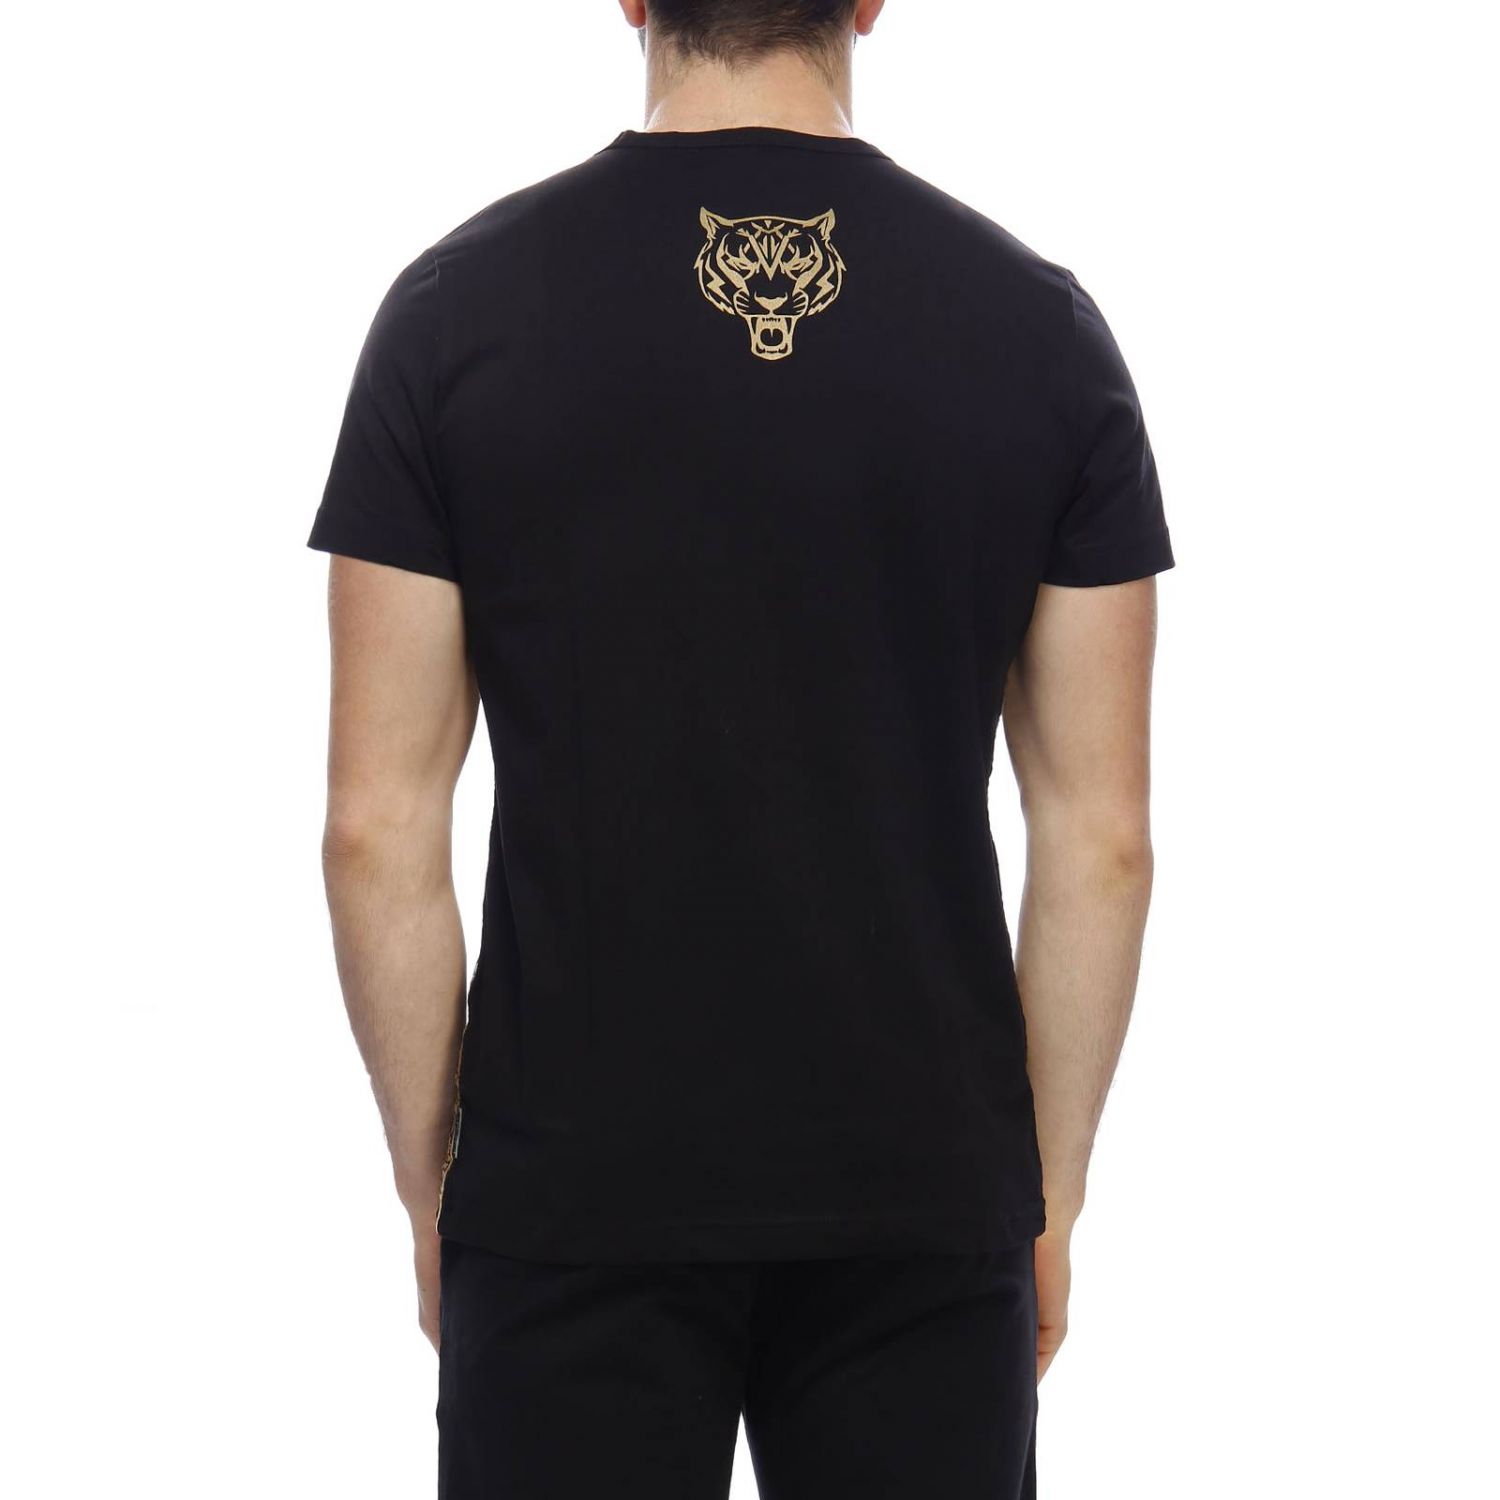 Plein Sport Outlet: t-shirt for man - Black | Plein Sport t-shirt ...